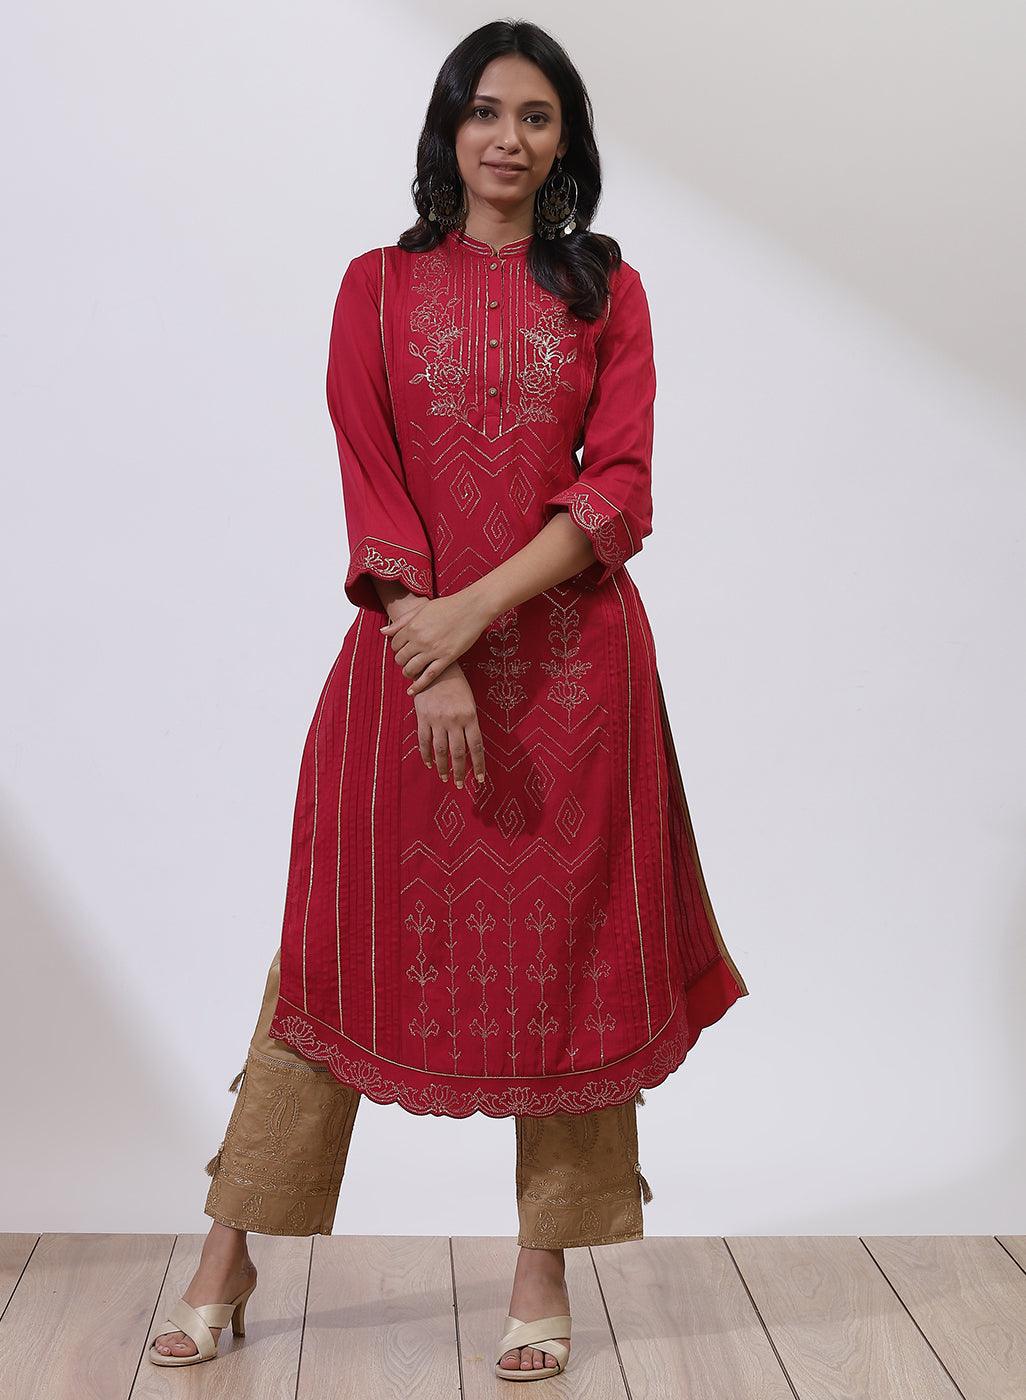 Shop W for Woman Apparel Online in India | W Ladies Wear